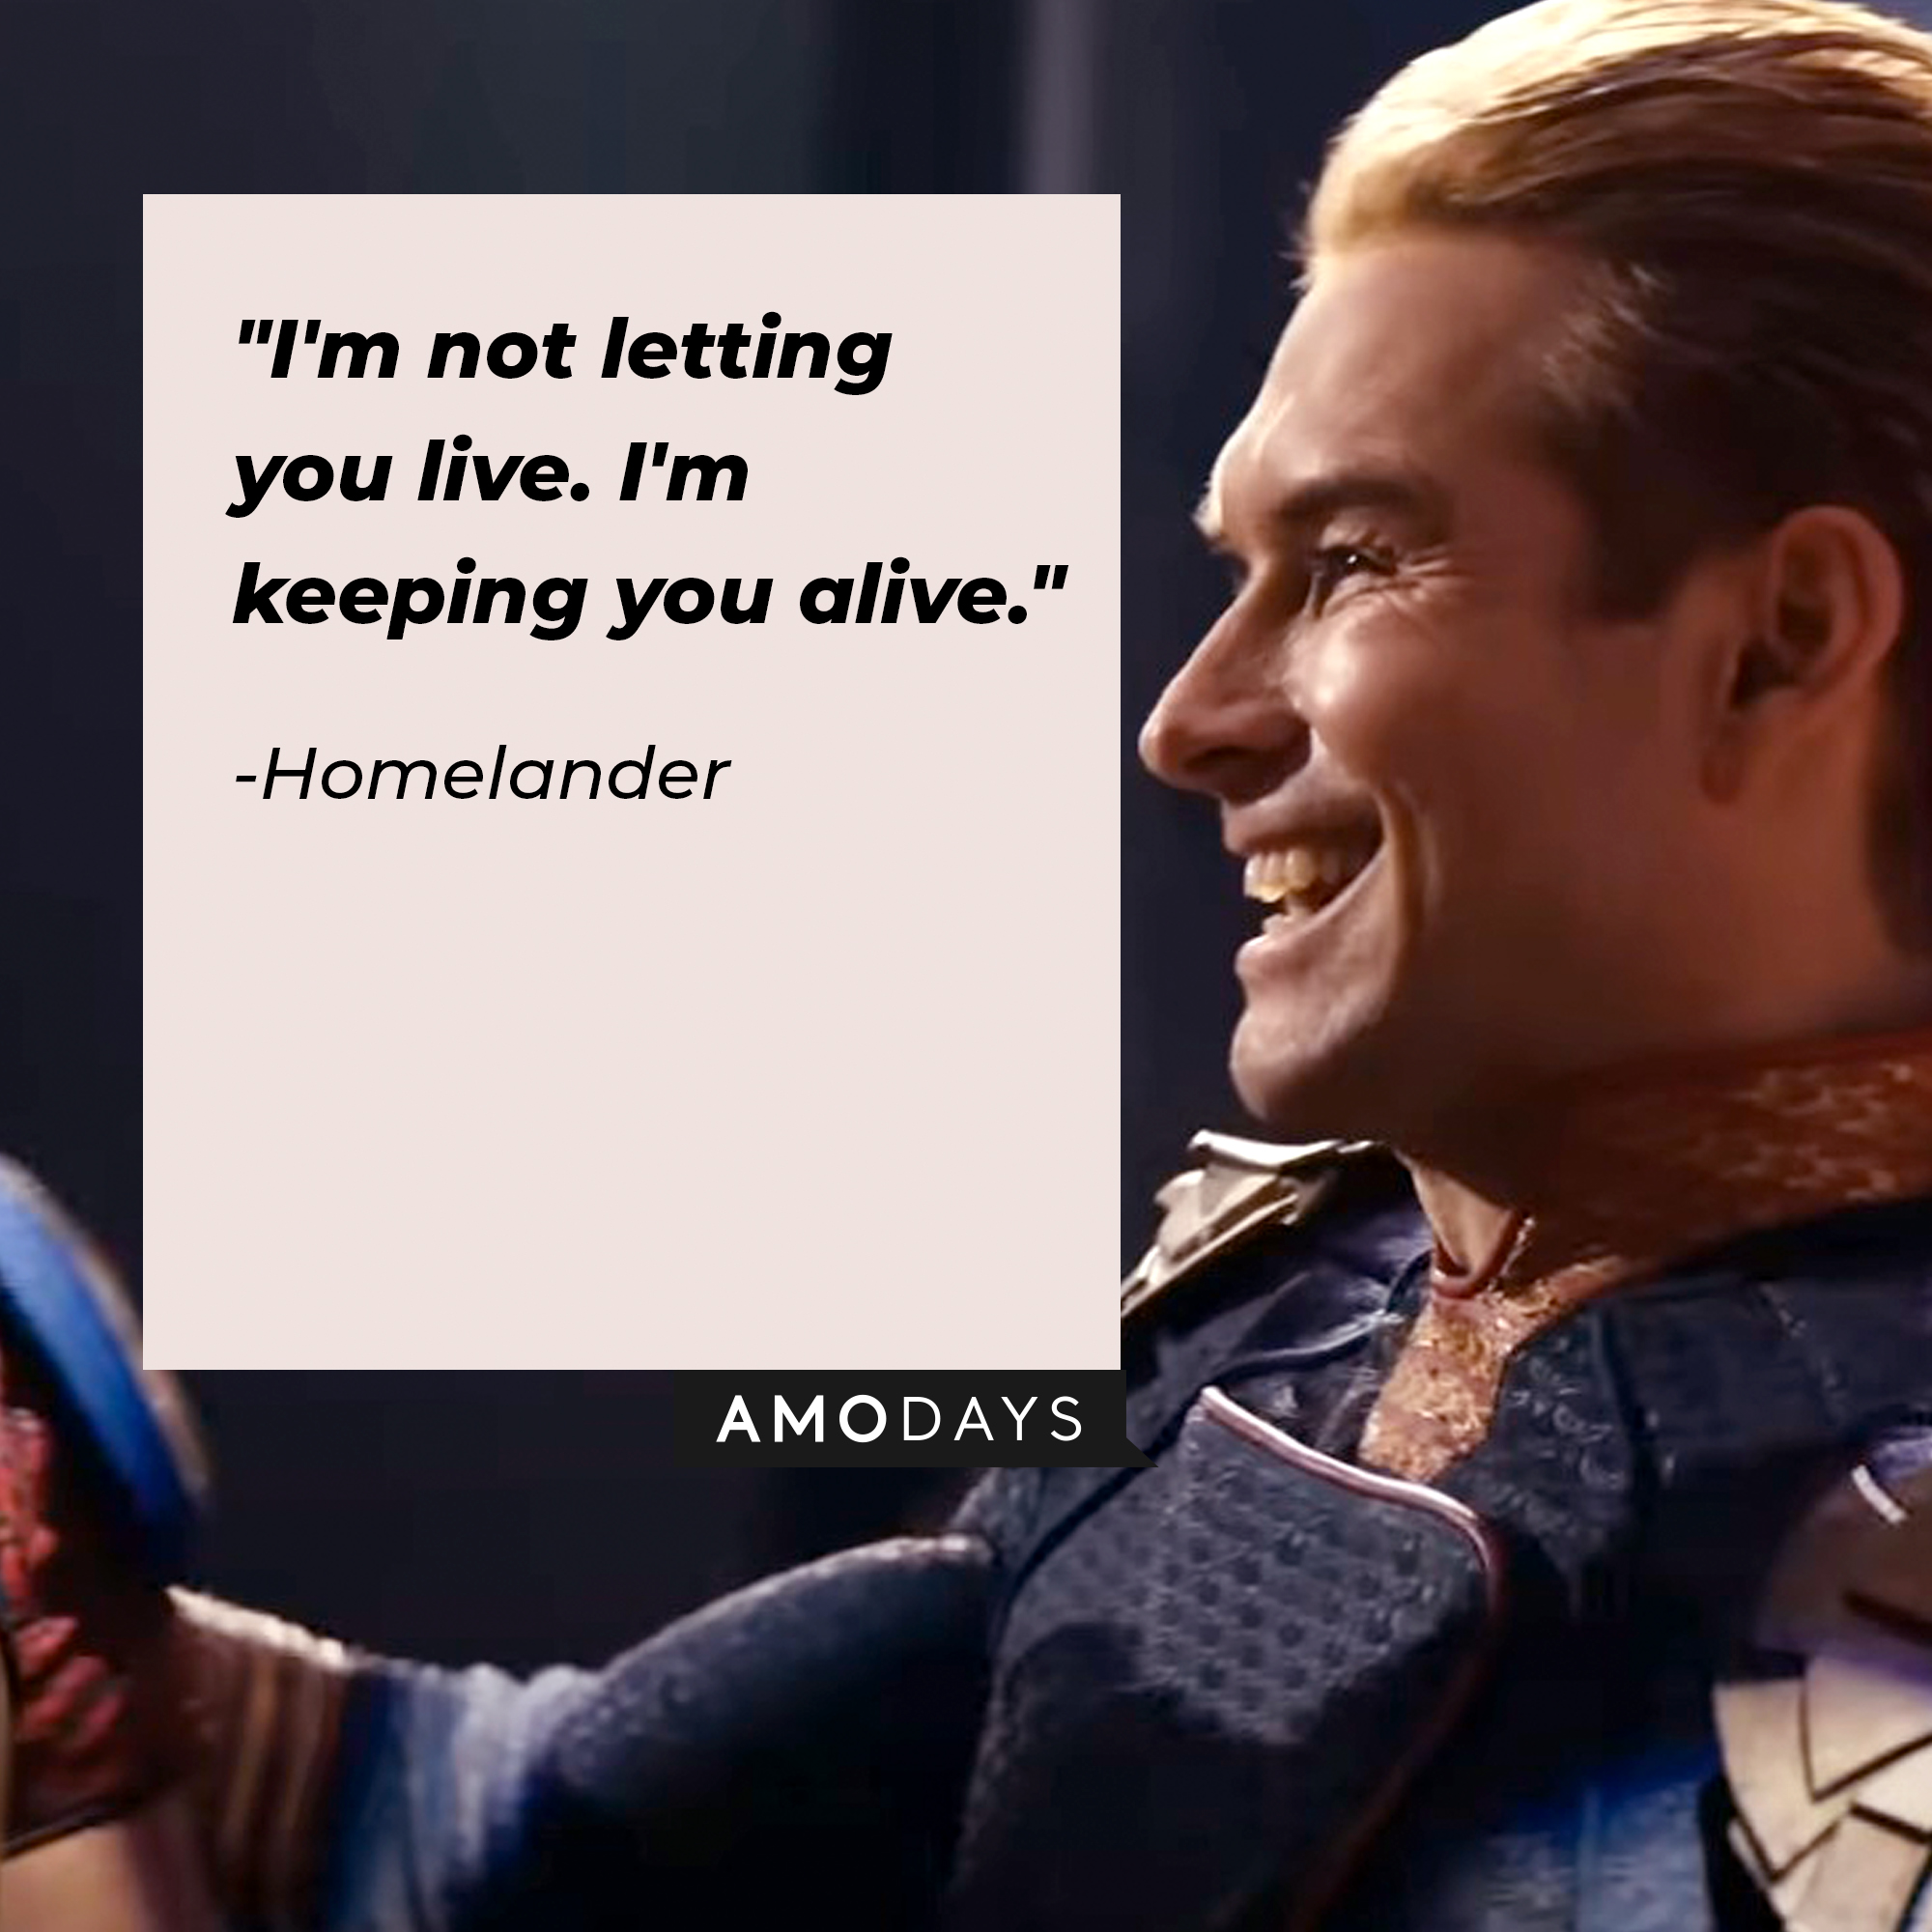 Homelander's quote: "I'm not letting you live. I'm keeping you alive." | Source: Facebook.com/TheBoysTV